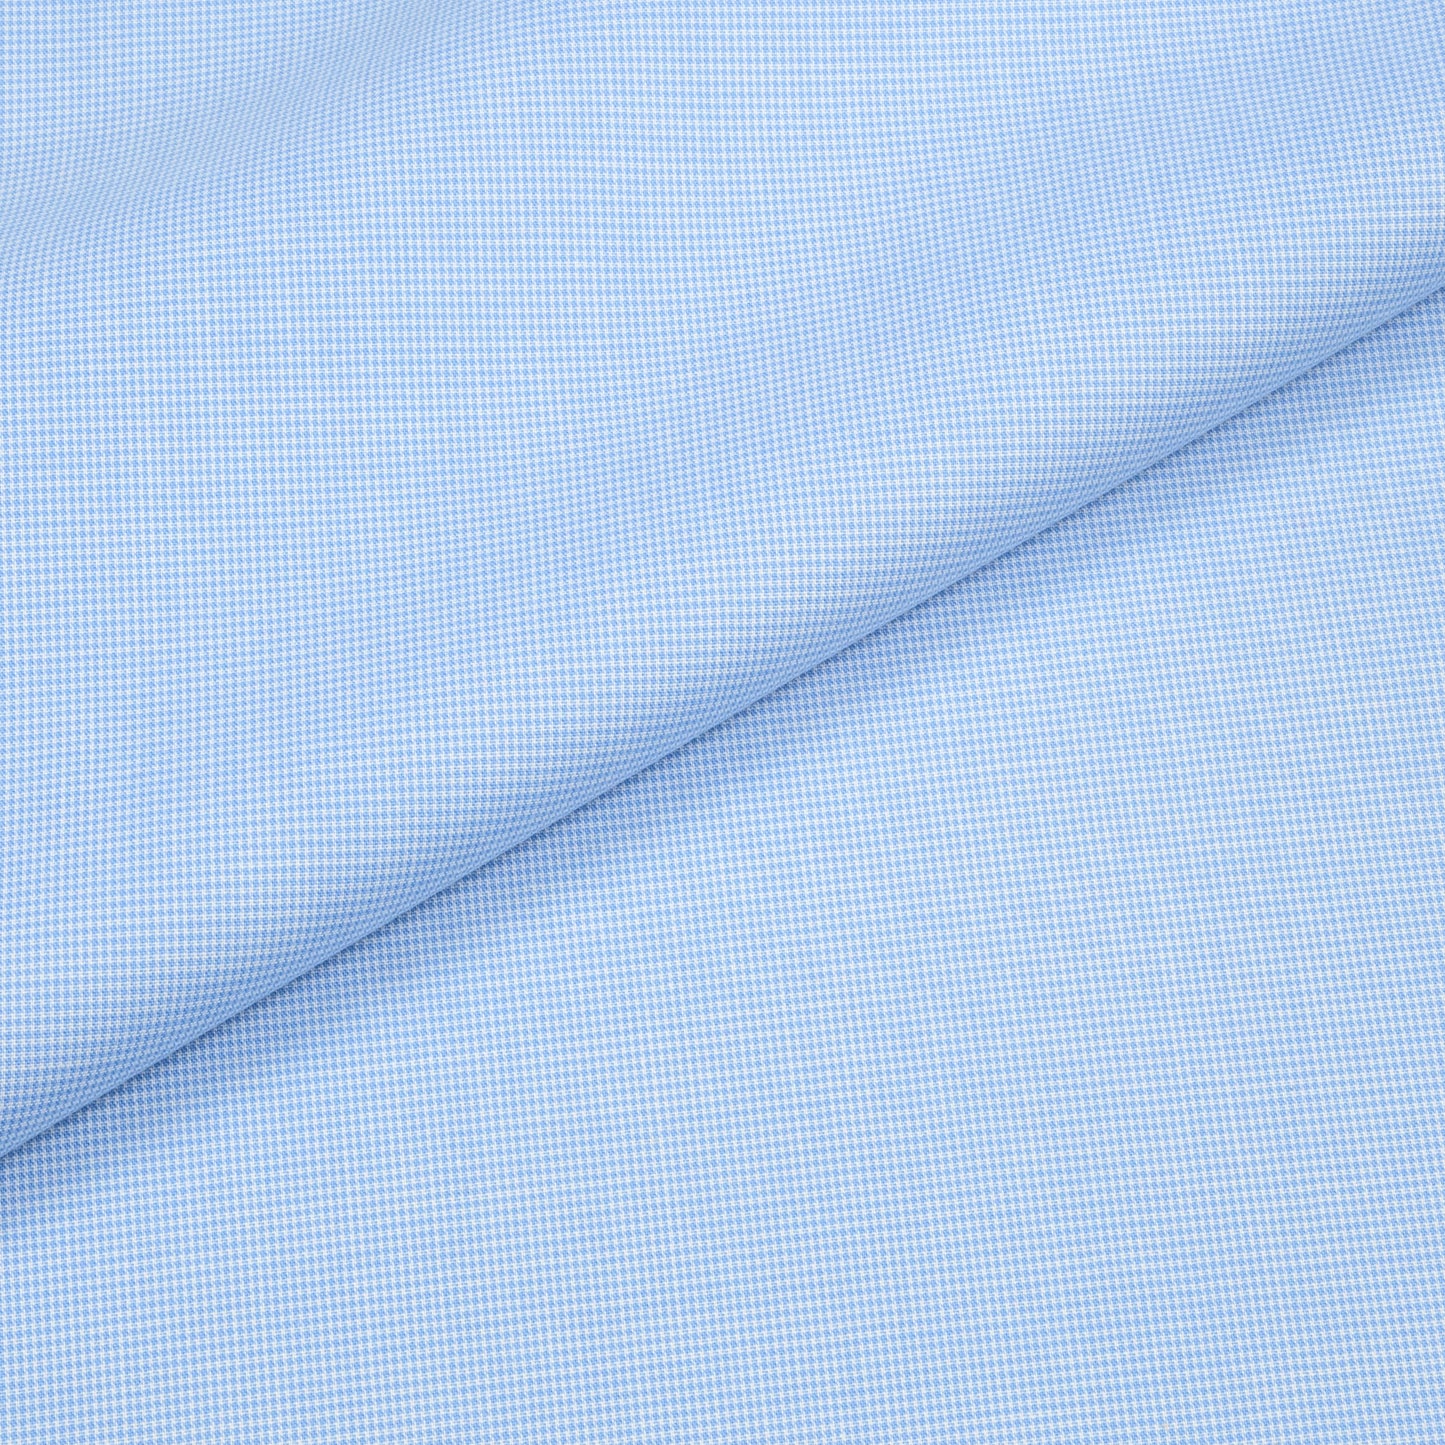 Blue Nailshead Cotton Shirt MFC0184